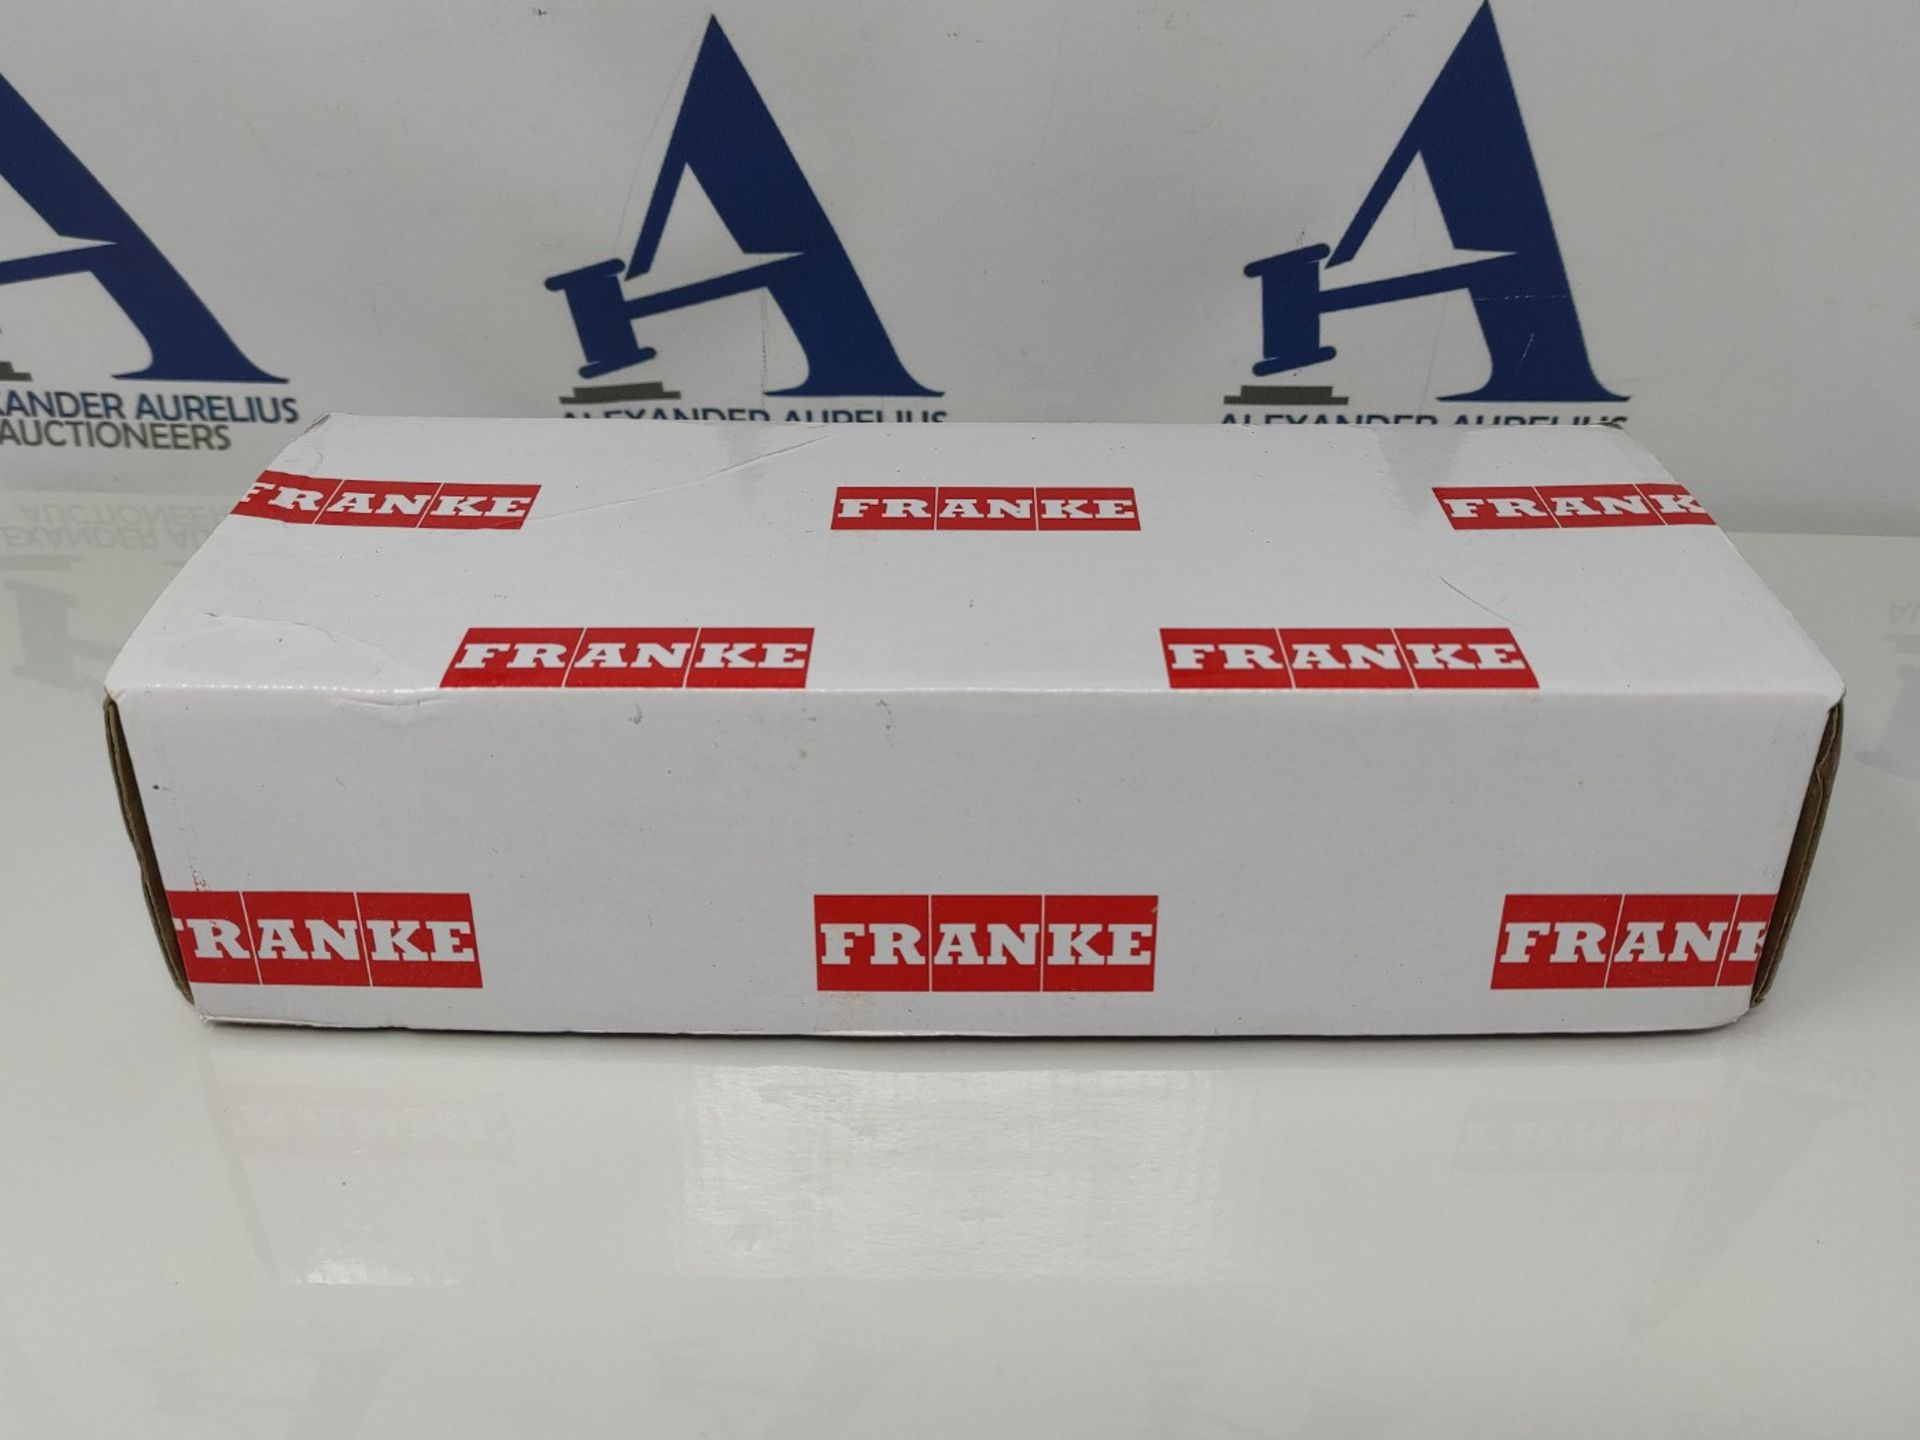 Franke 119.0500.480 Granite Soap Dispenser, White Polar - Image 2 of 3